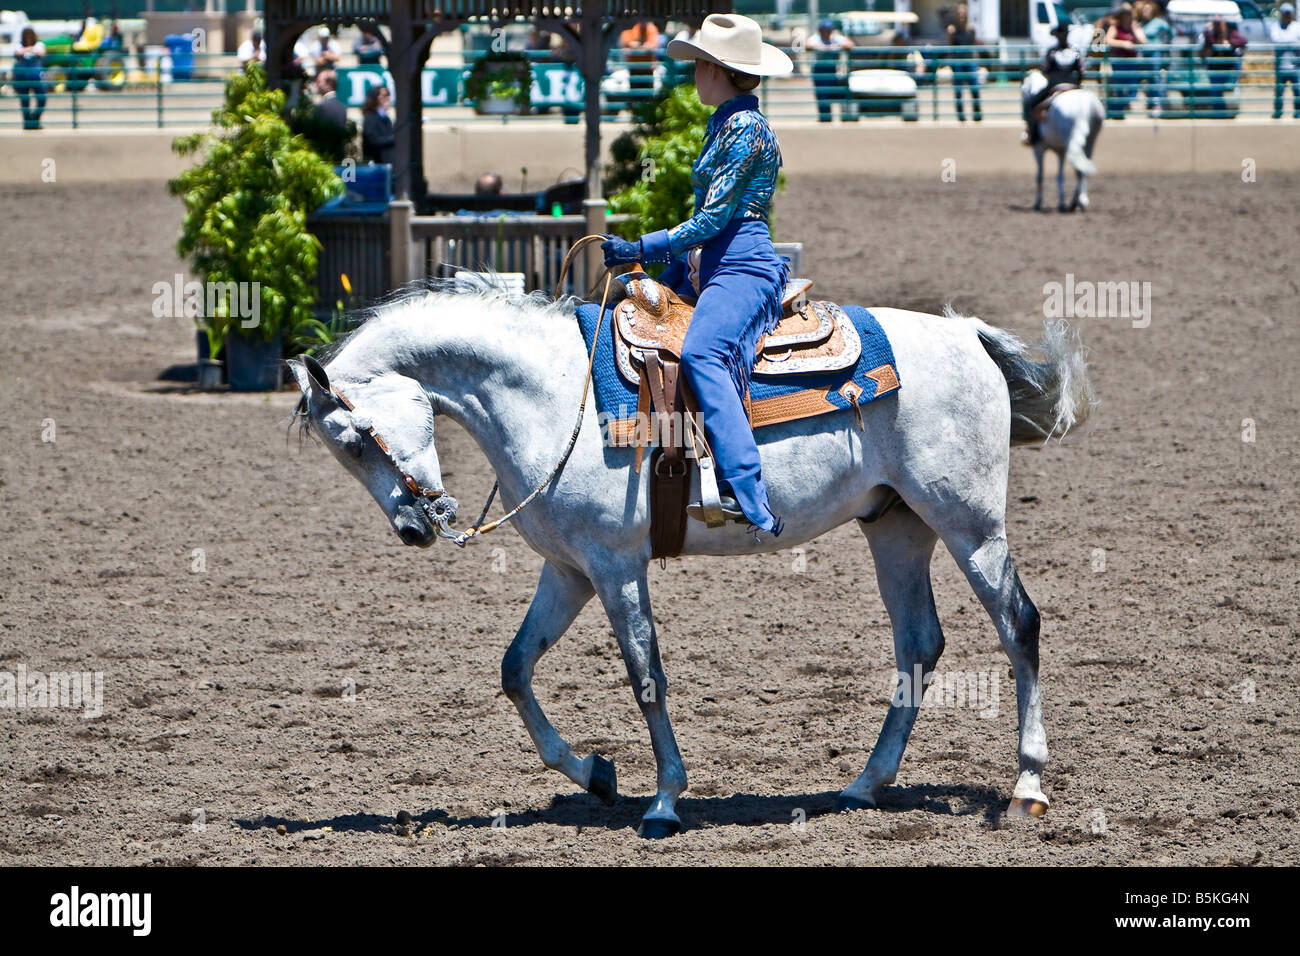 Arabian horse riders compete at the Region One Arabian Horse Show at the Del Mar Showpark Arena in Del Mar CA US Stock Photo